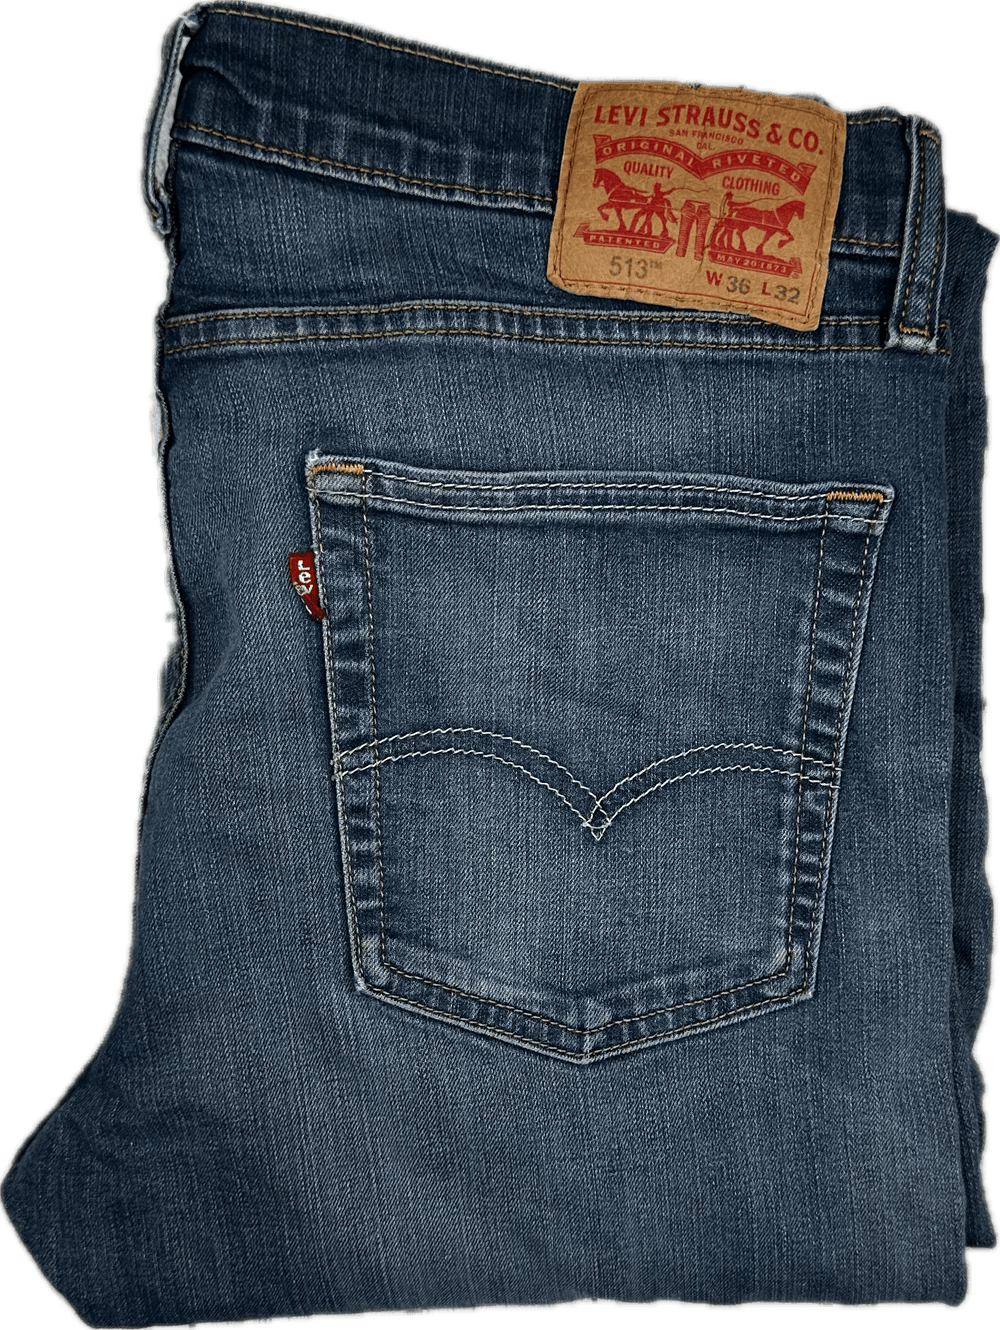 Levis Vintage Wash 513 Mens Stretch Jeans - Size 36S - Jean Pool